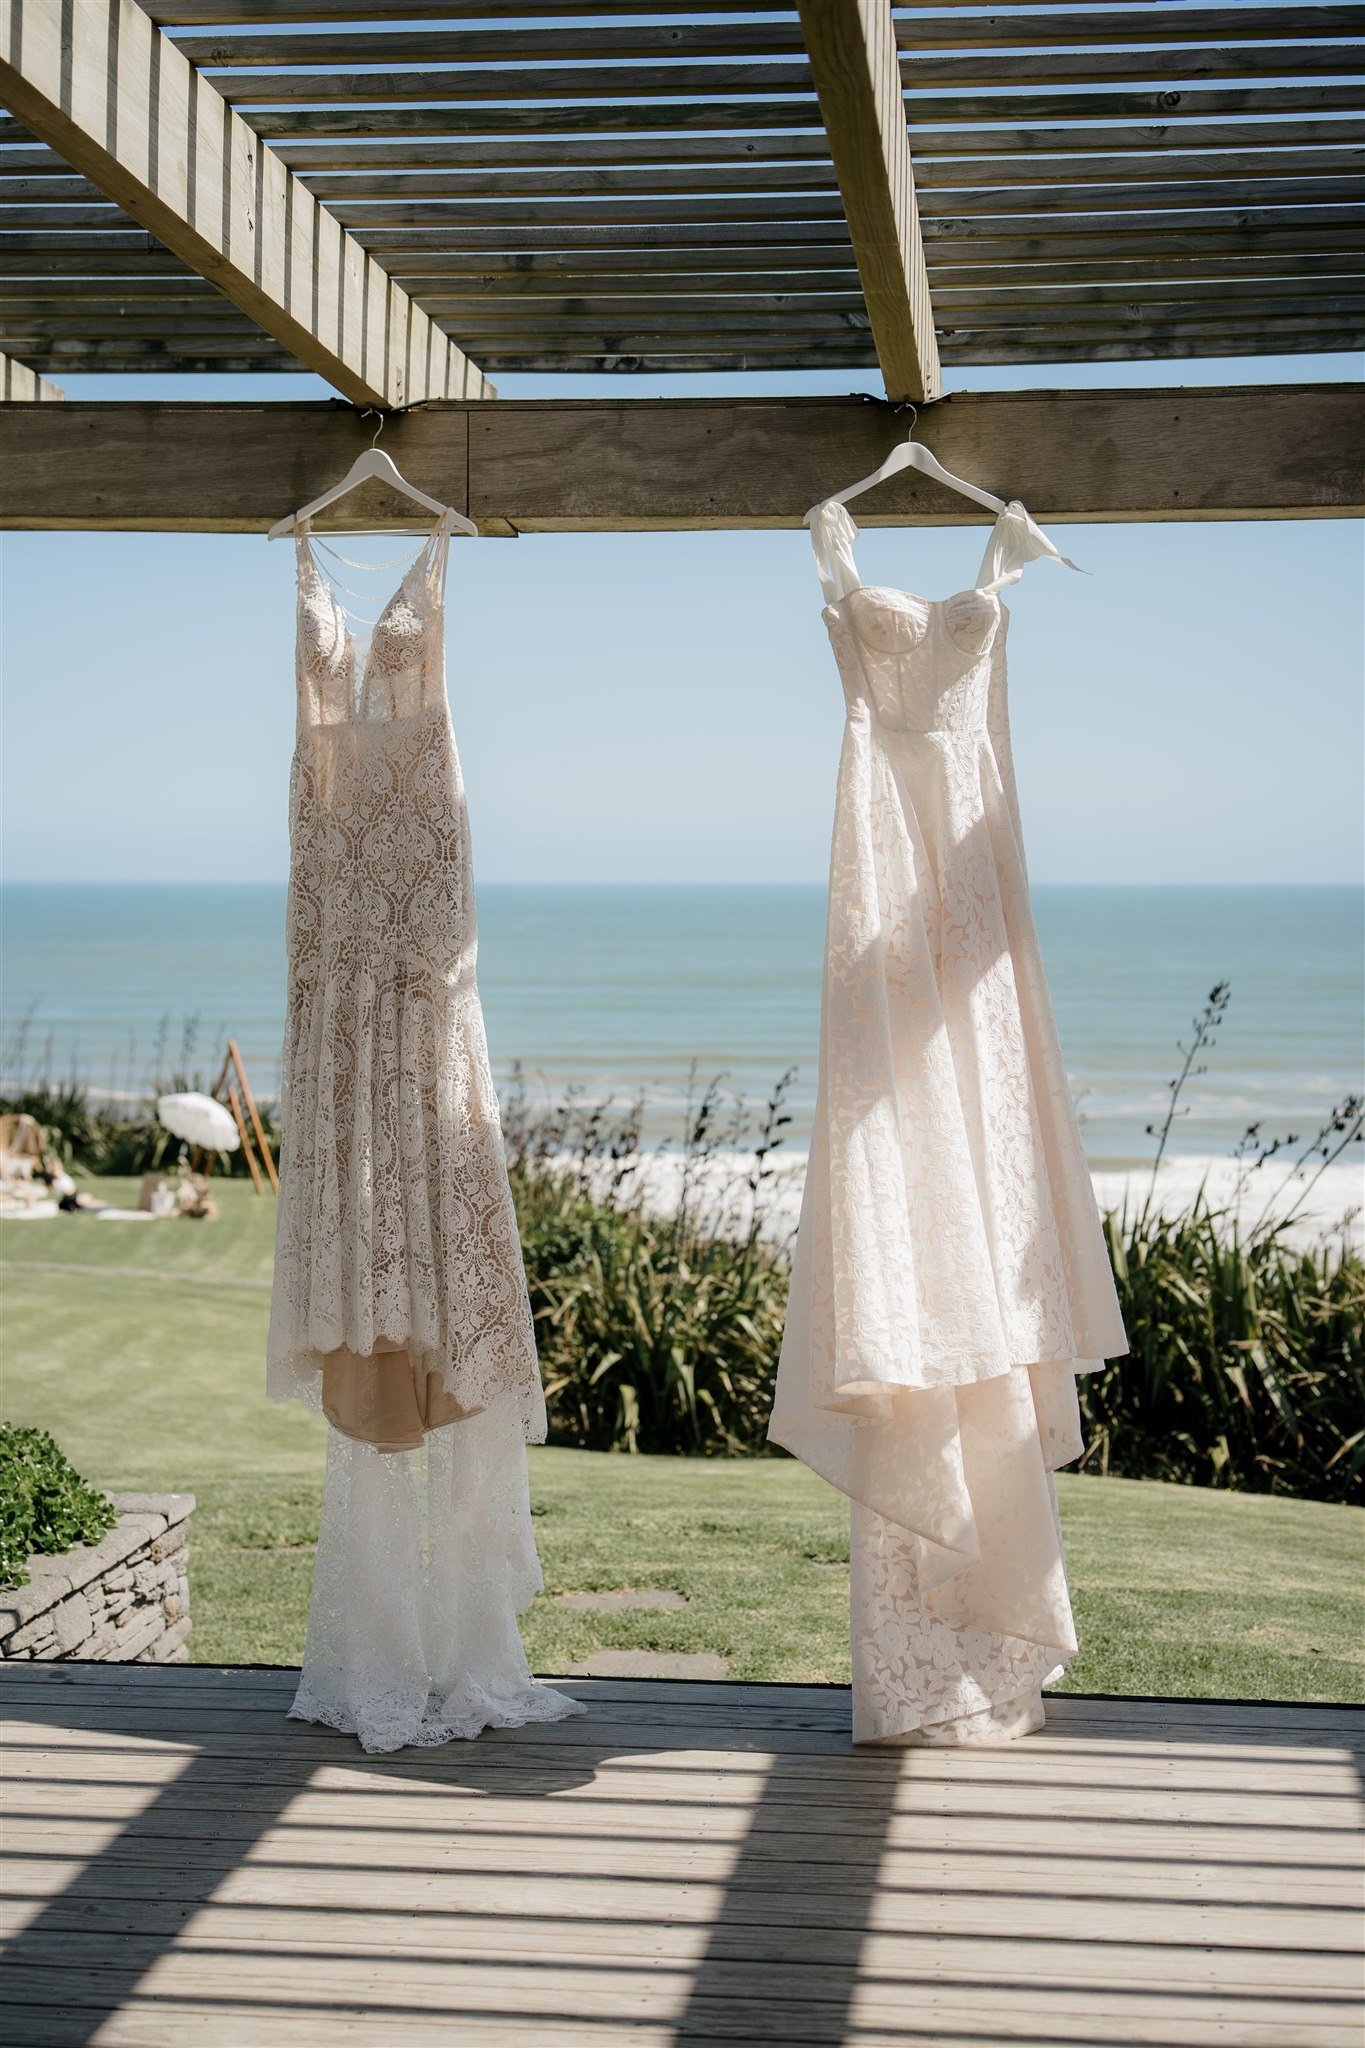 castaways-NZ-new-zealand-auckland-wedding-photographer-photography-videography-film-dear-white-productions-best-venue-waiuku-engagement-elopement-style-beach-intimate (12).jpg